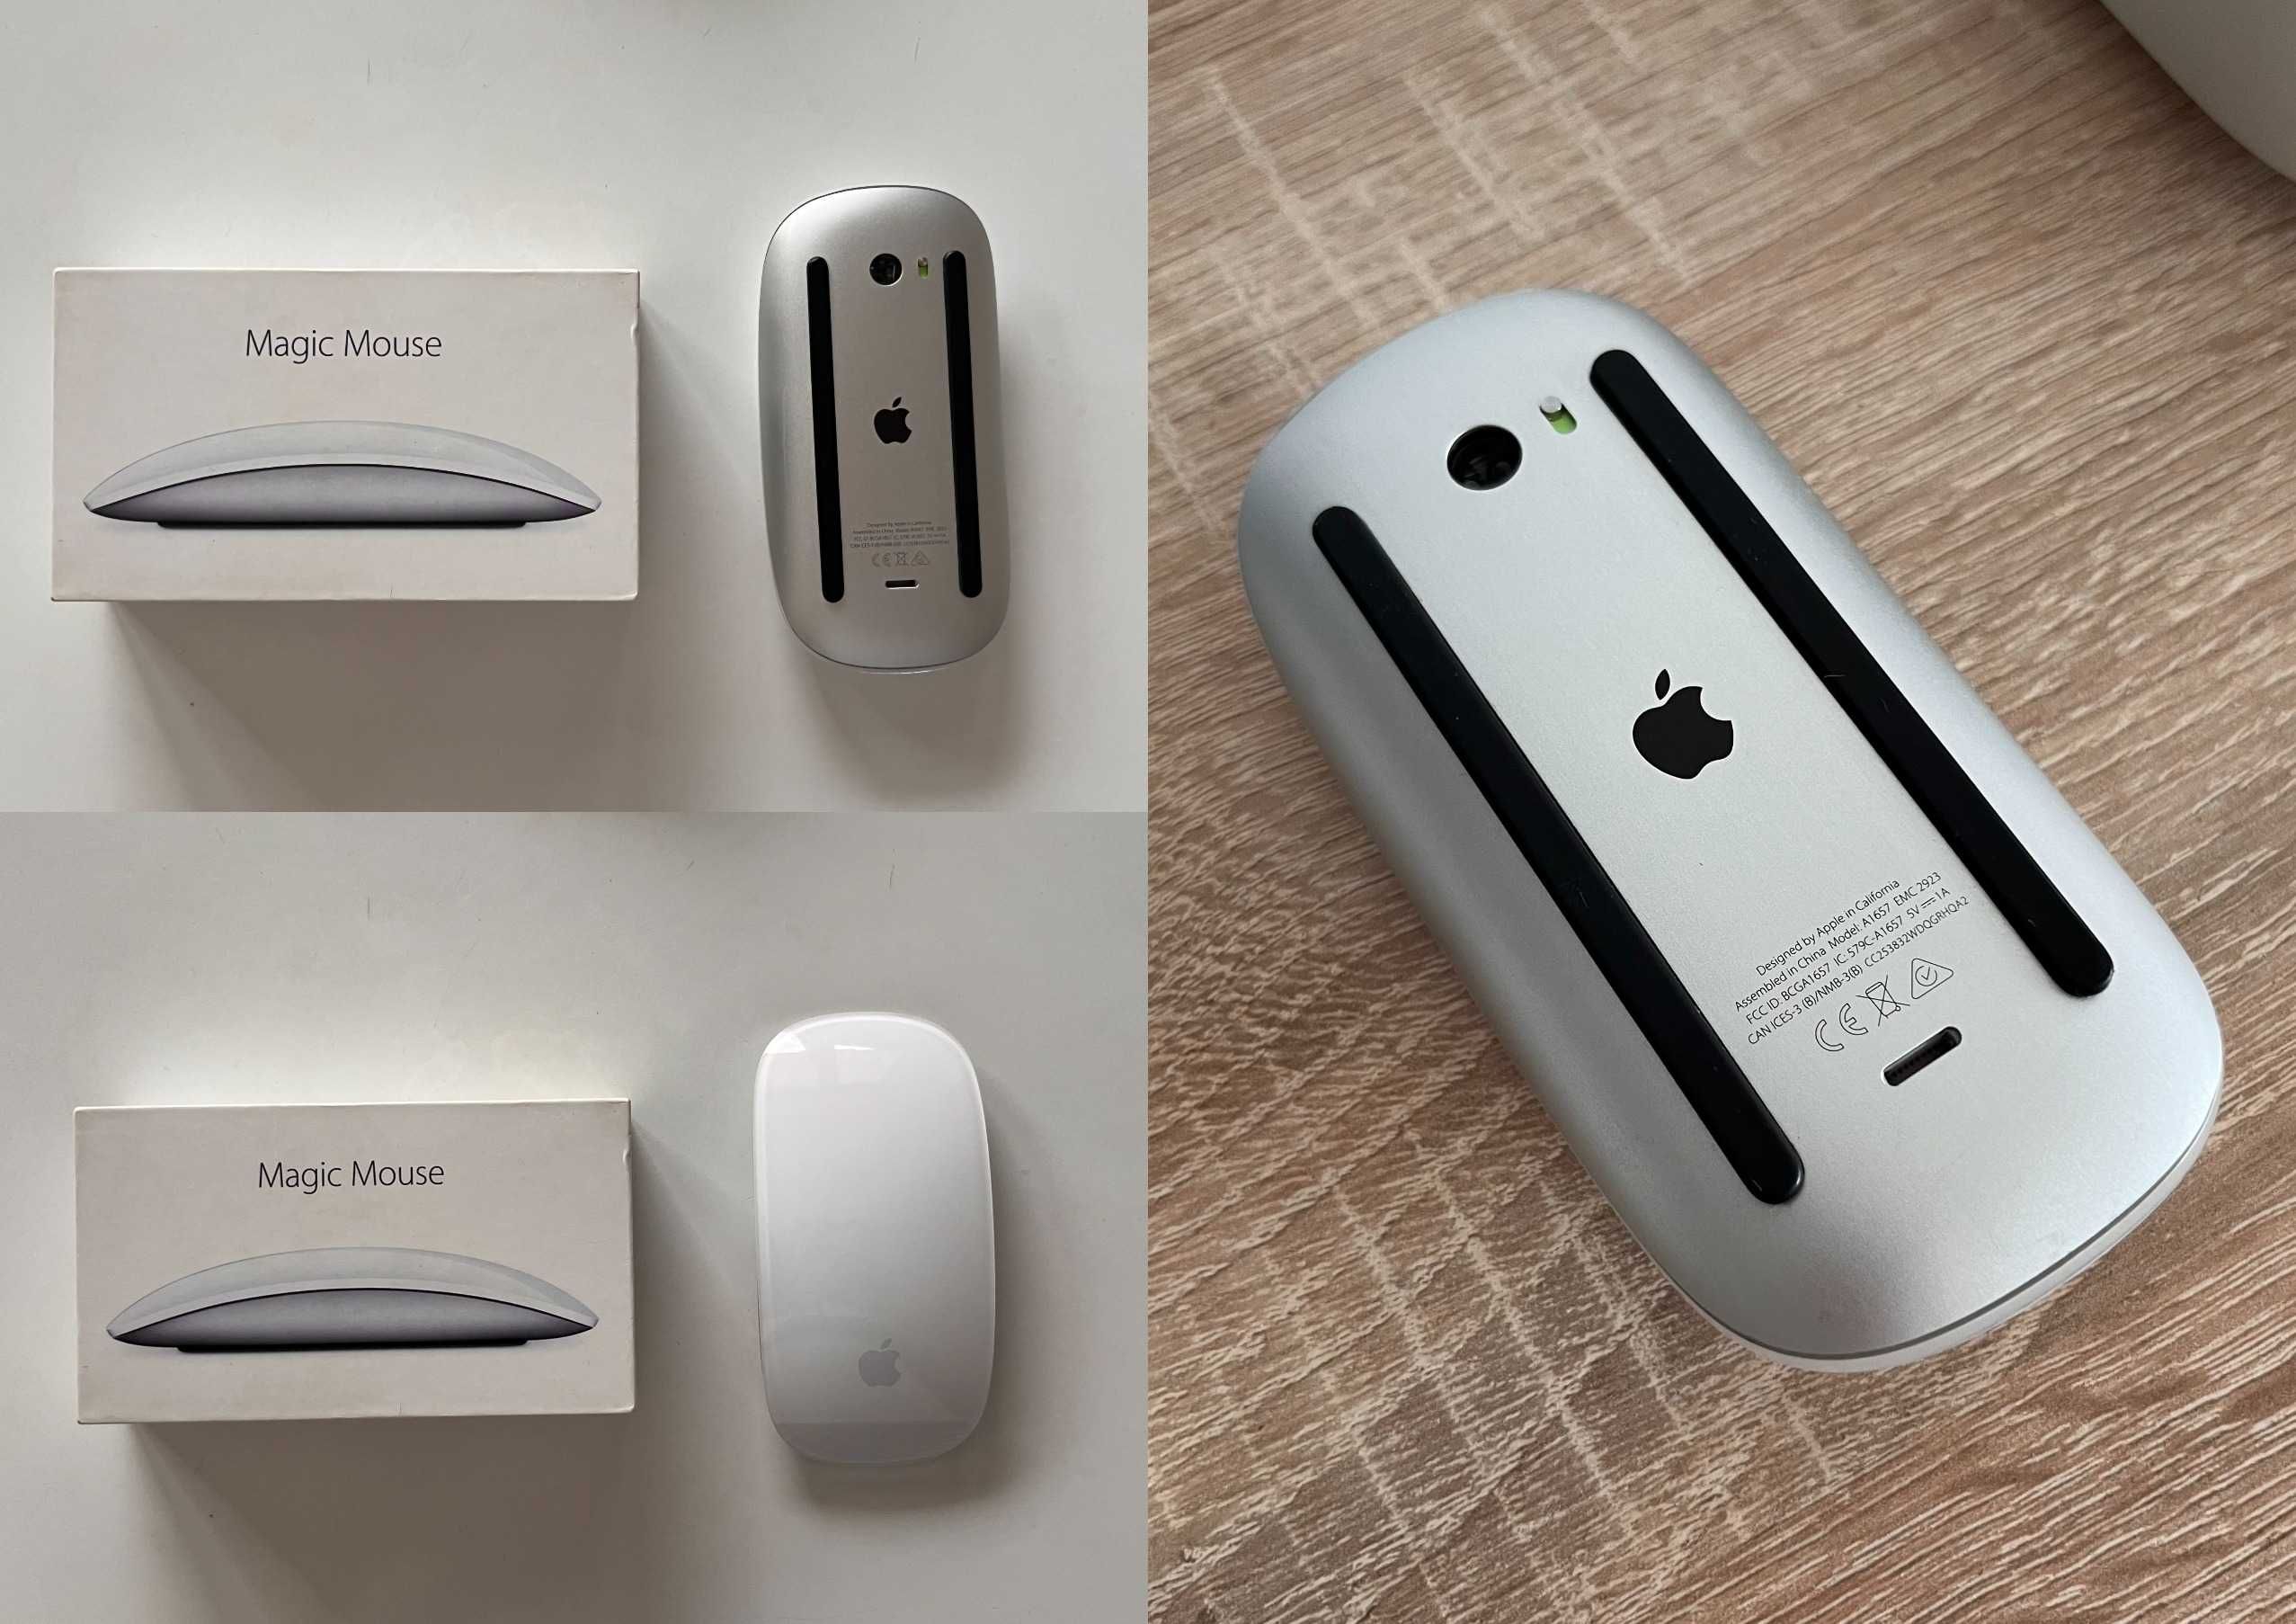  Apple Mac mini M1 8GB/256GB jak nowy + duży zestaw (kit)